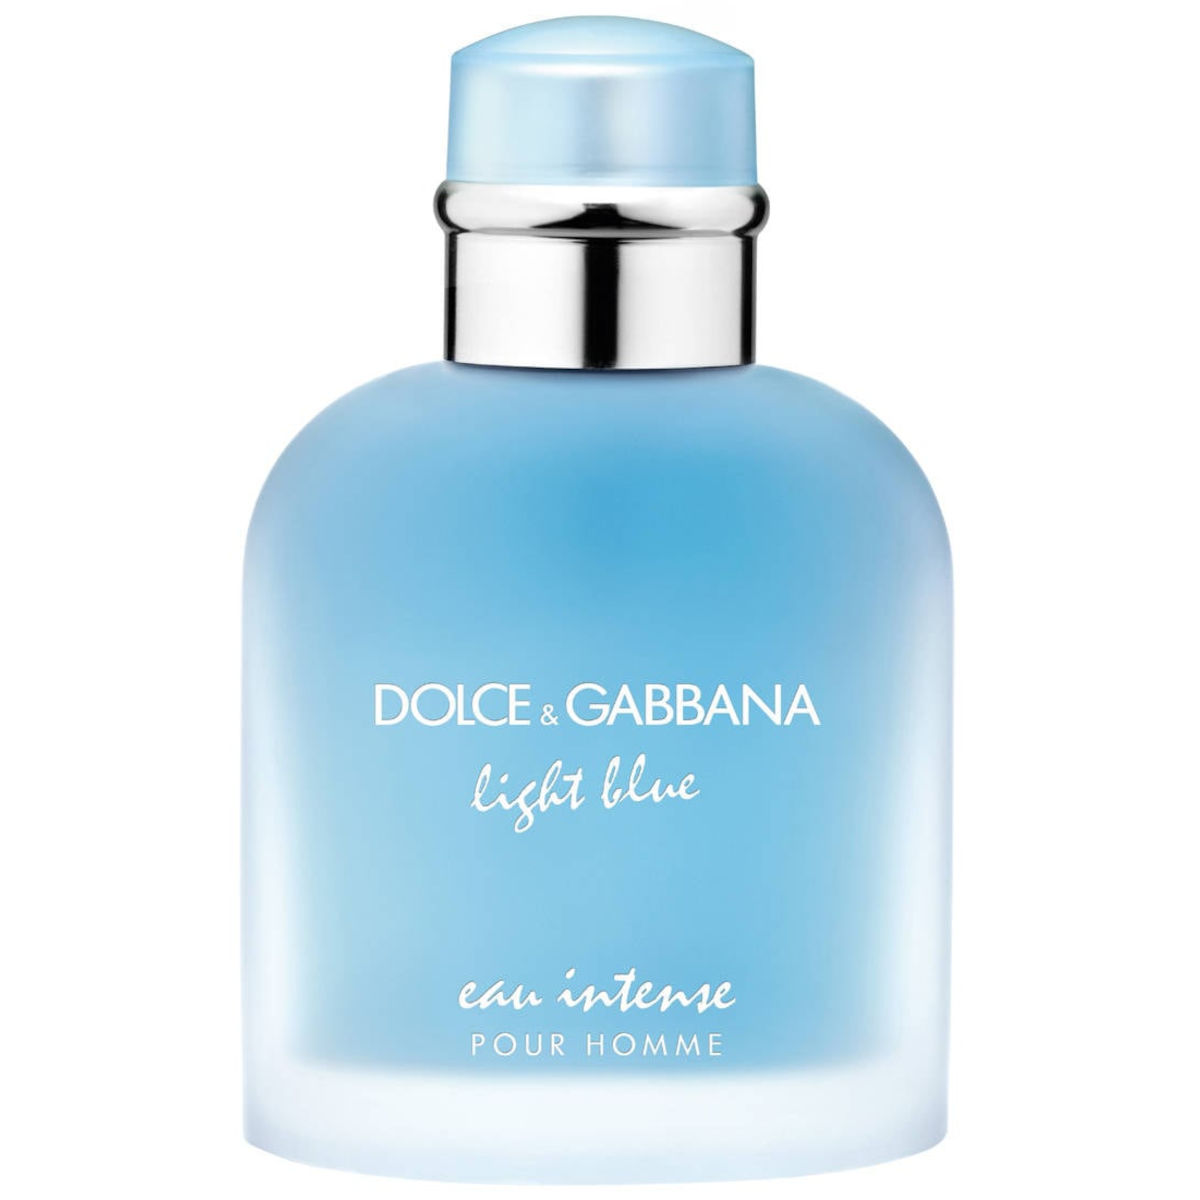 Dolce & Gabbana profumo agrumato uomo